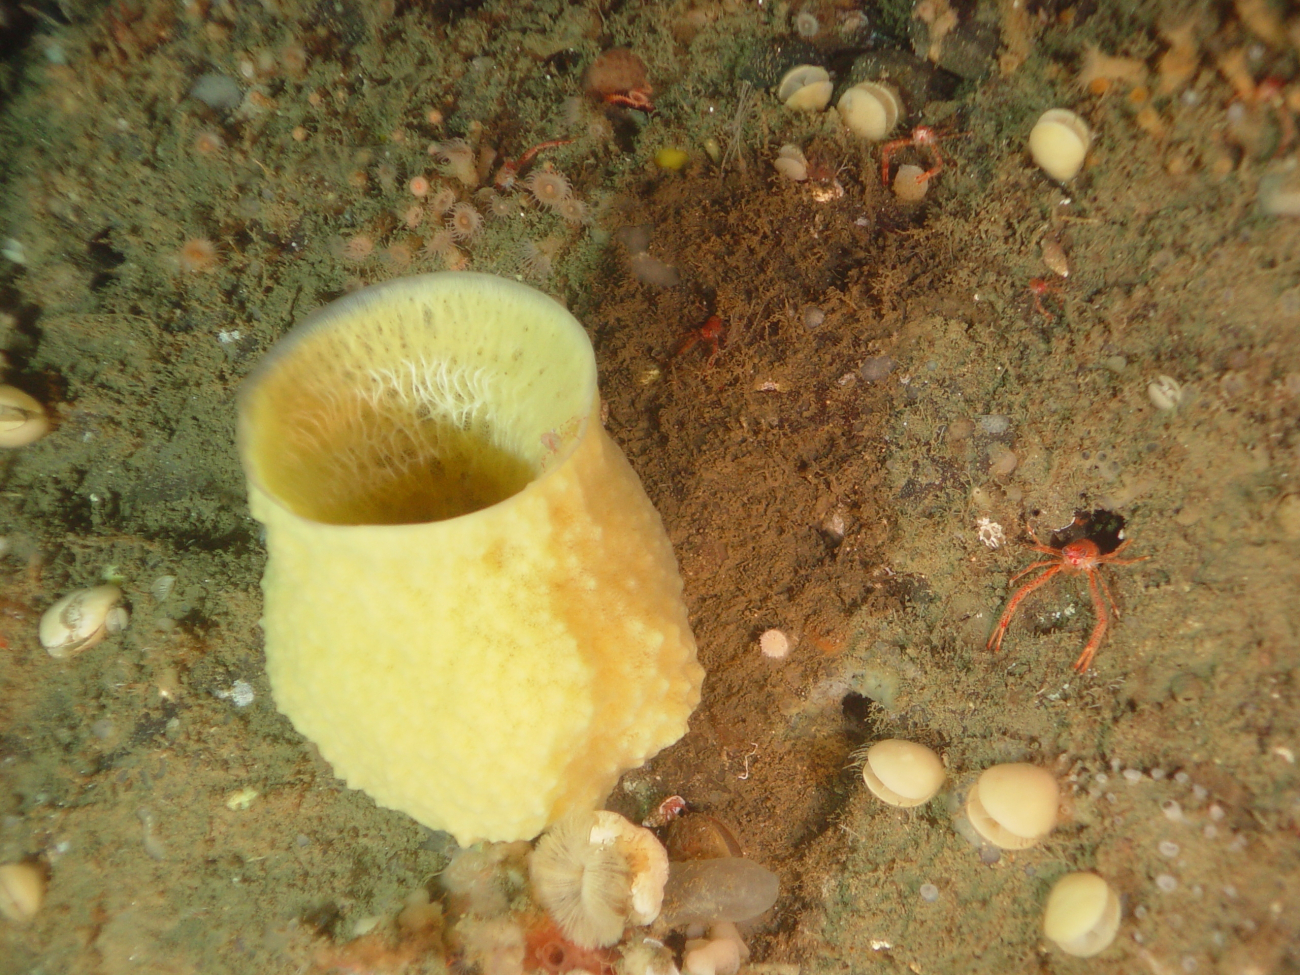 A large yellow sponge